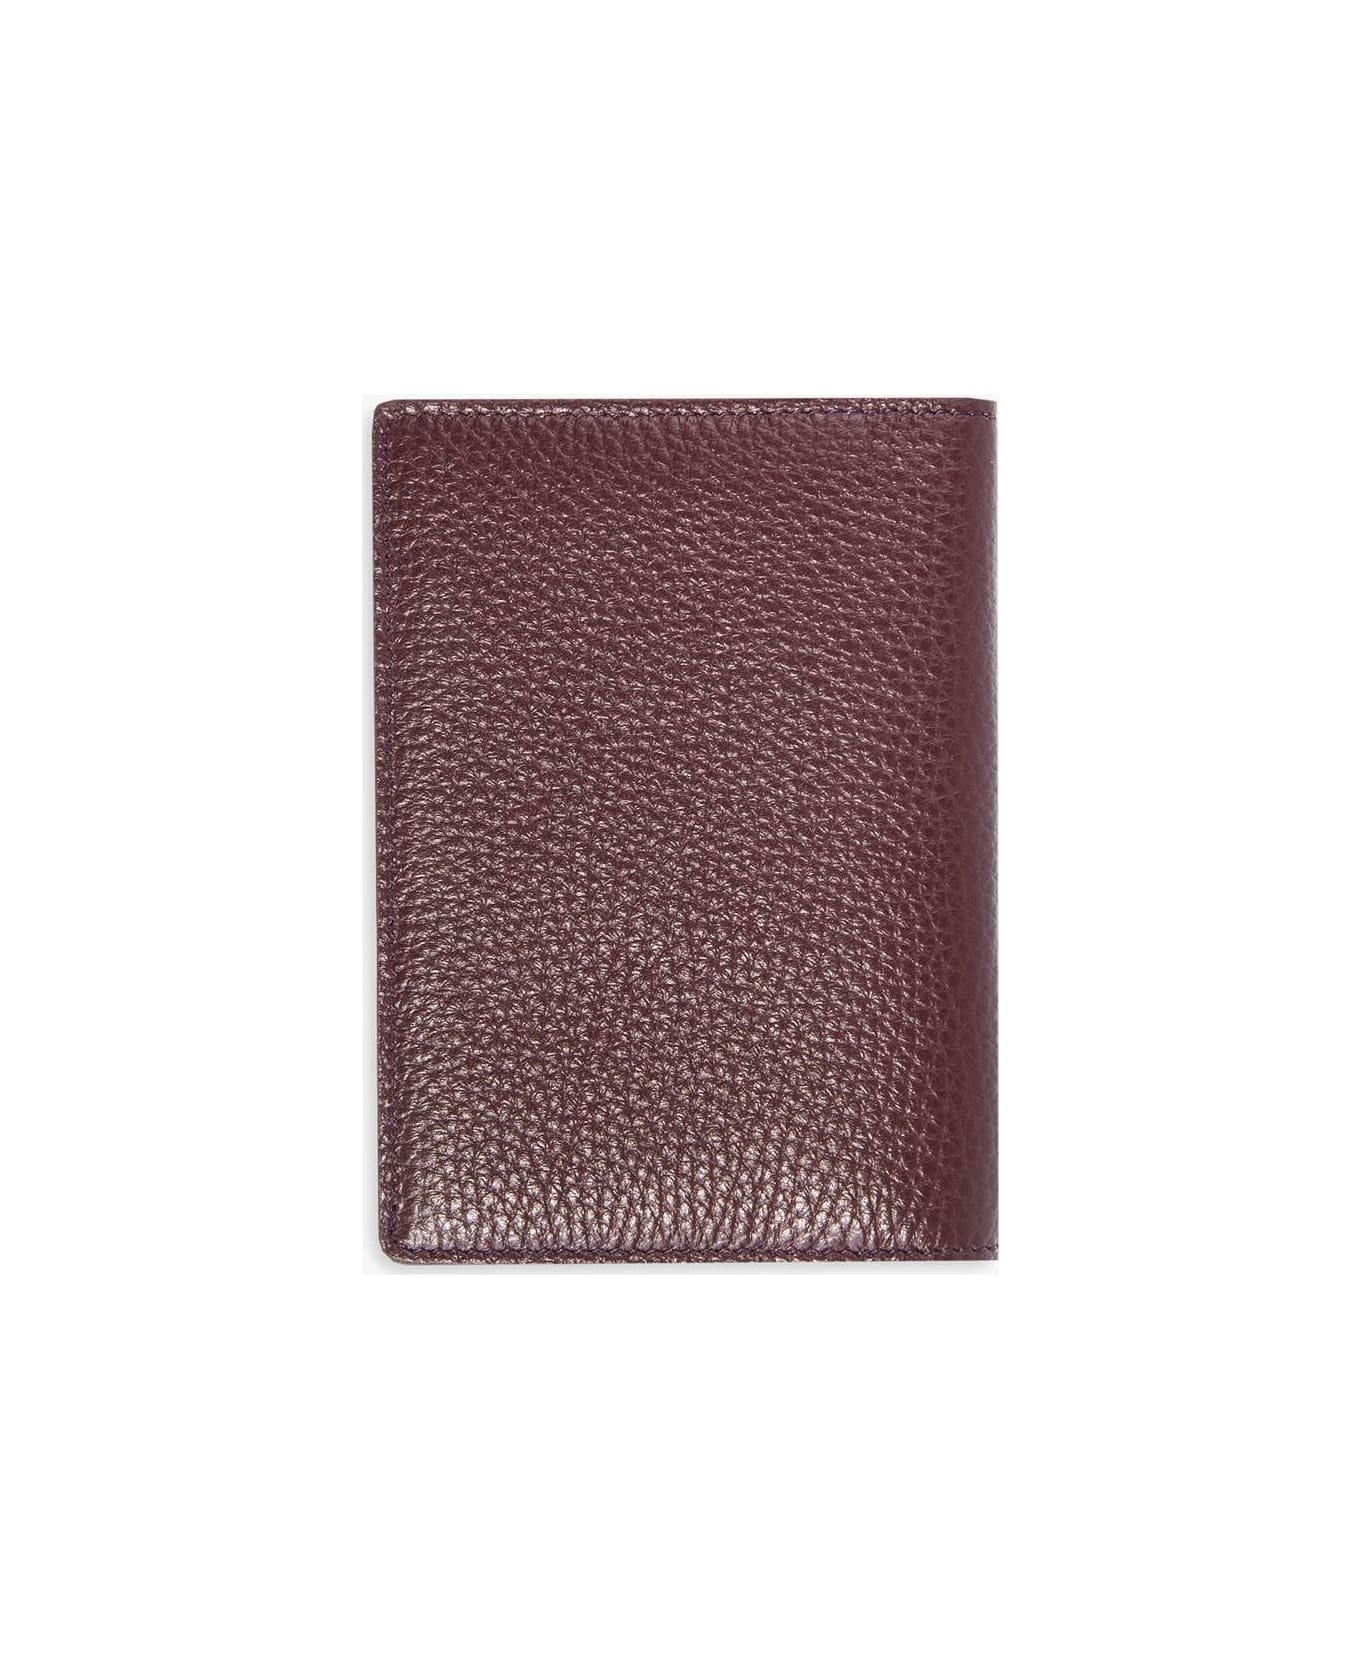 Larusmiani Passport Cover 'fiumicino' Wallet - DarkRed 財布